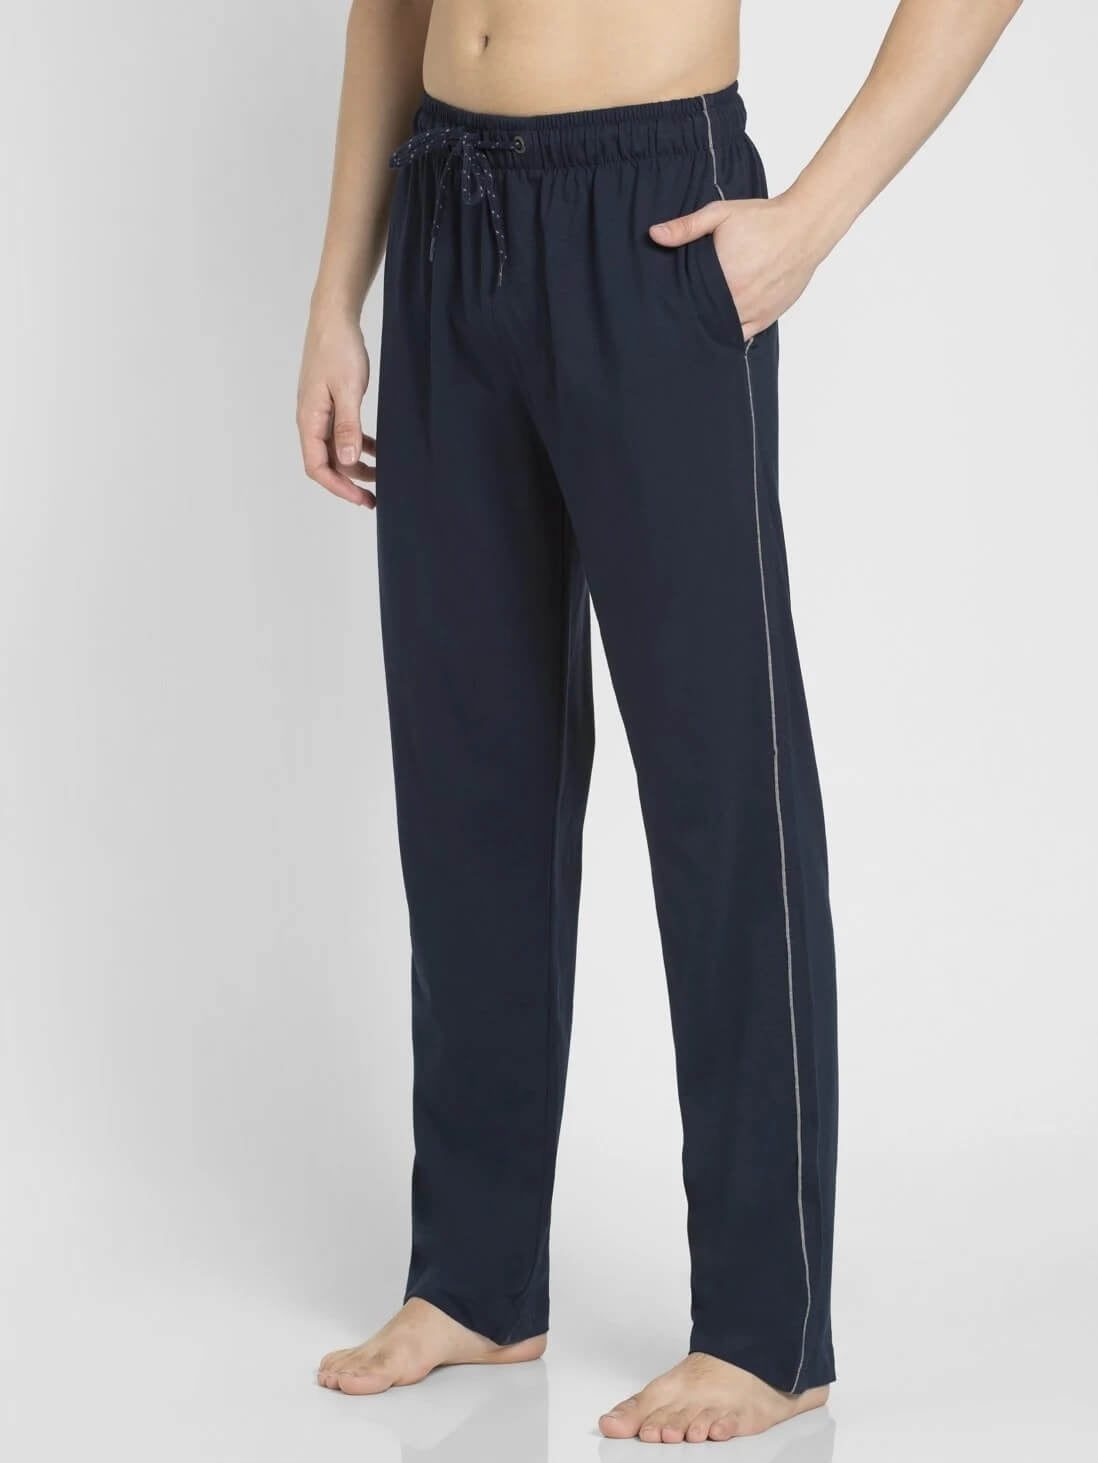 Ladies' JOCKEY JOGGER Activewear Pant Super Soft Tapered Leg, Pick Color &  Size | eBay